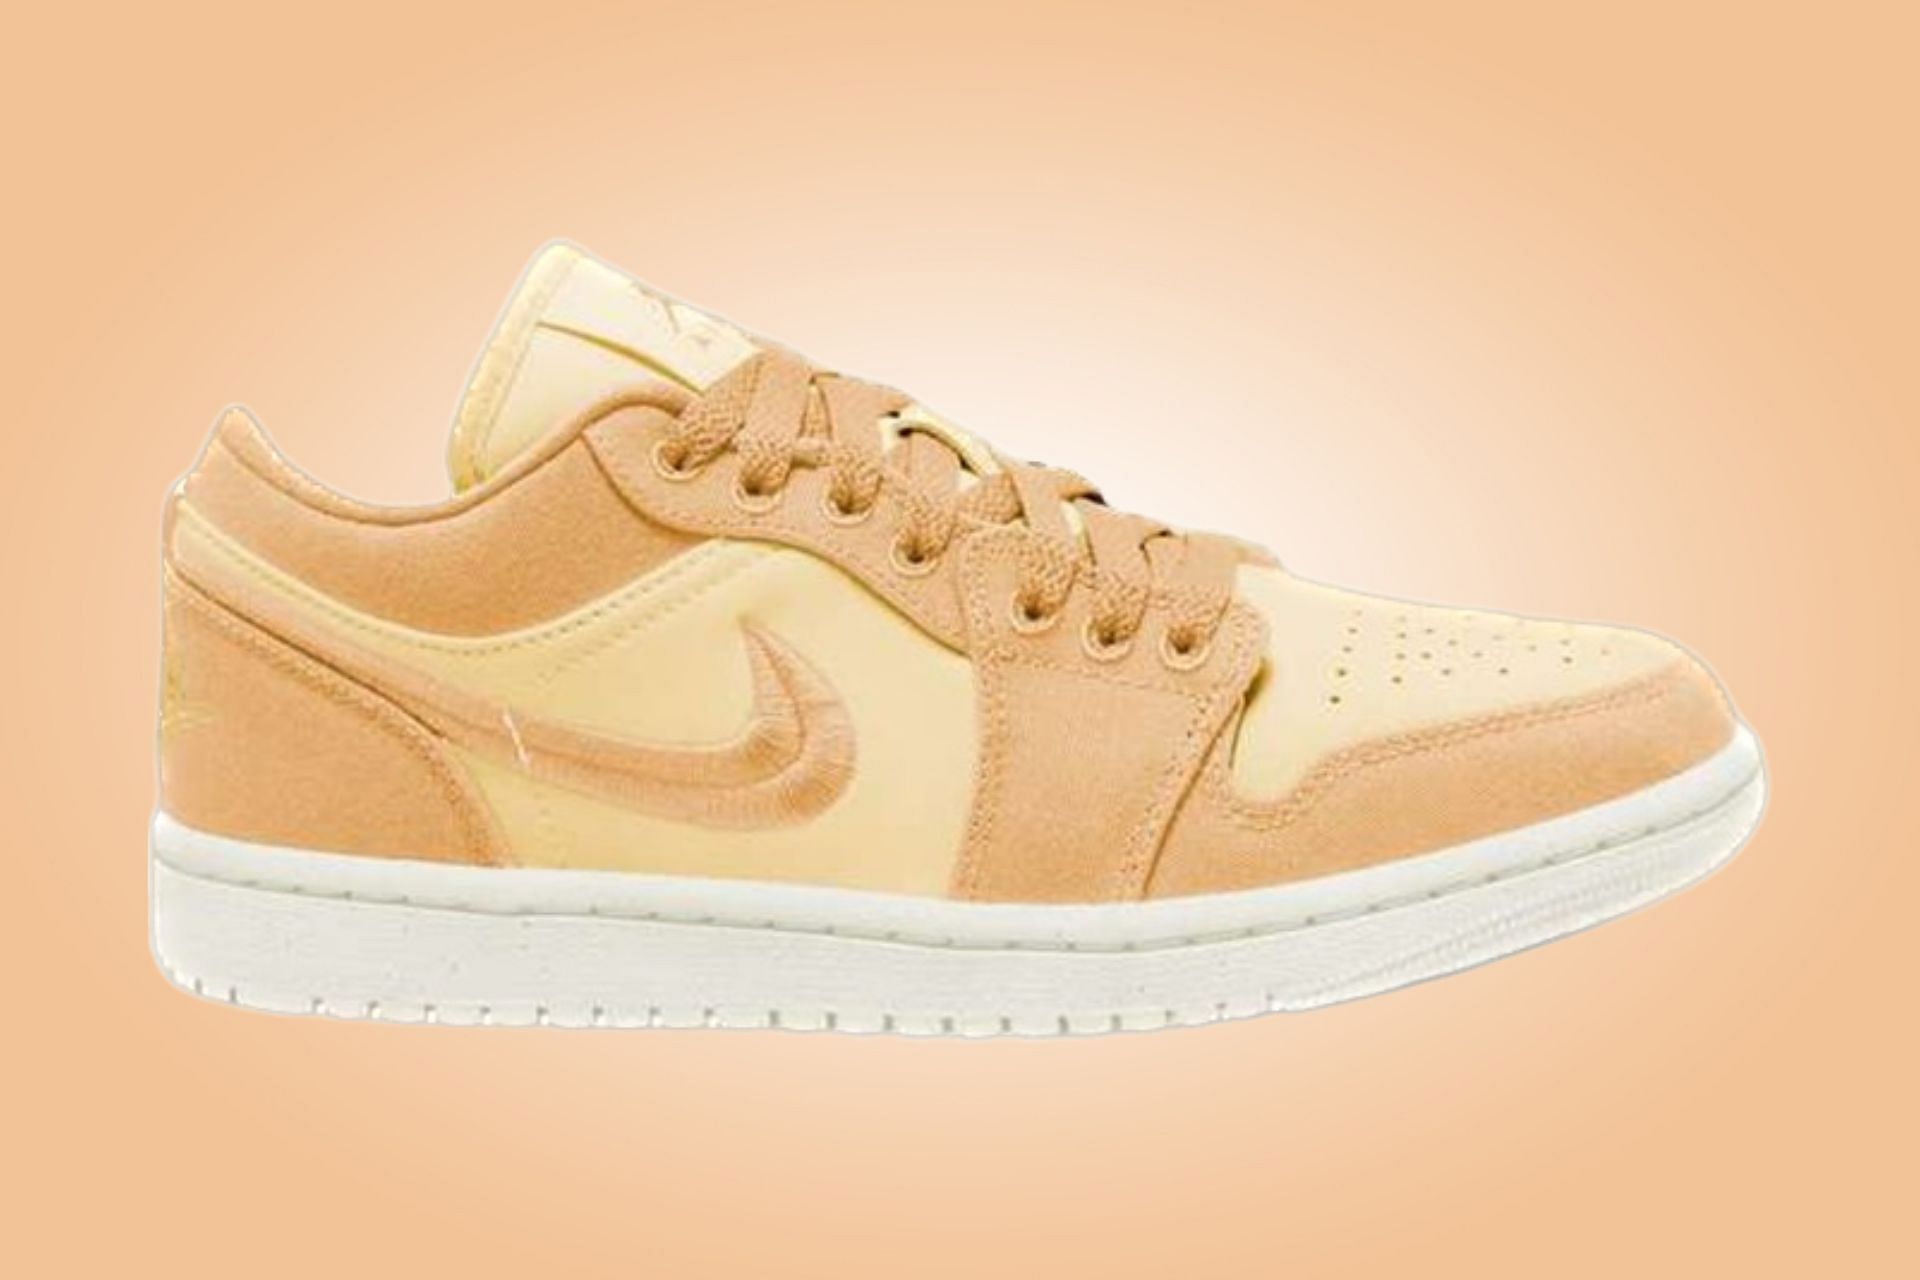 Air Jordan 1 Low Celestial Gold shoes (Image via Nike)